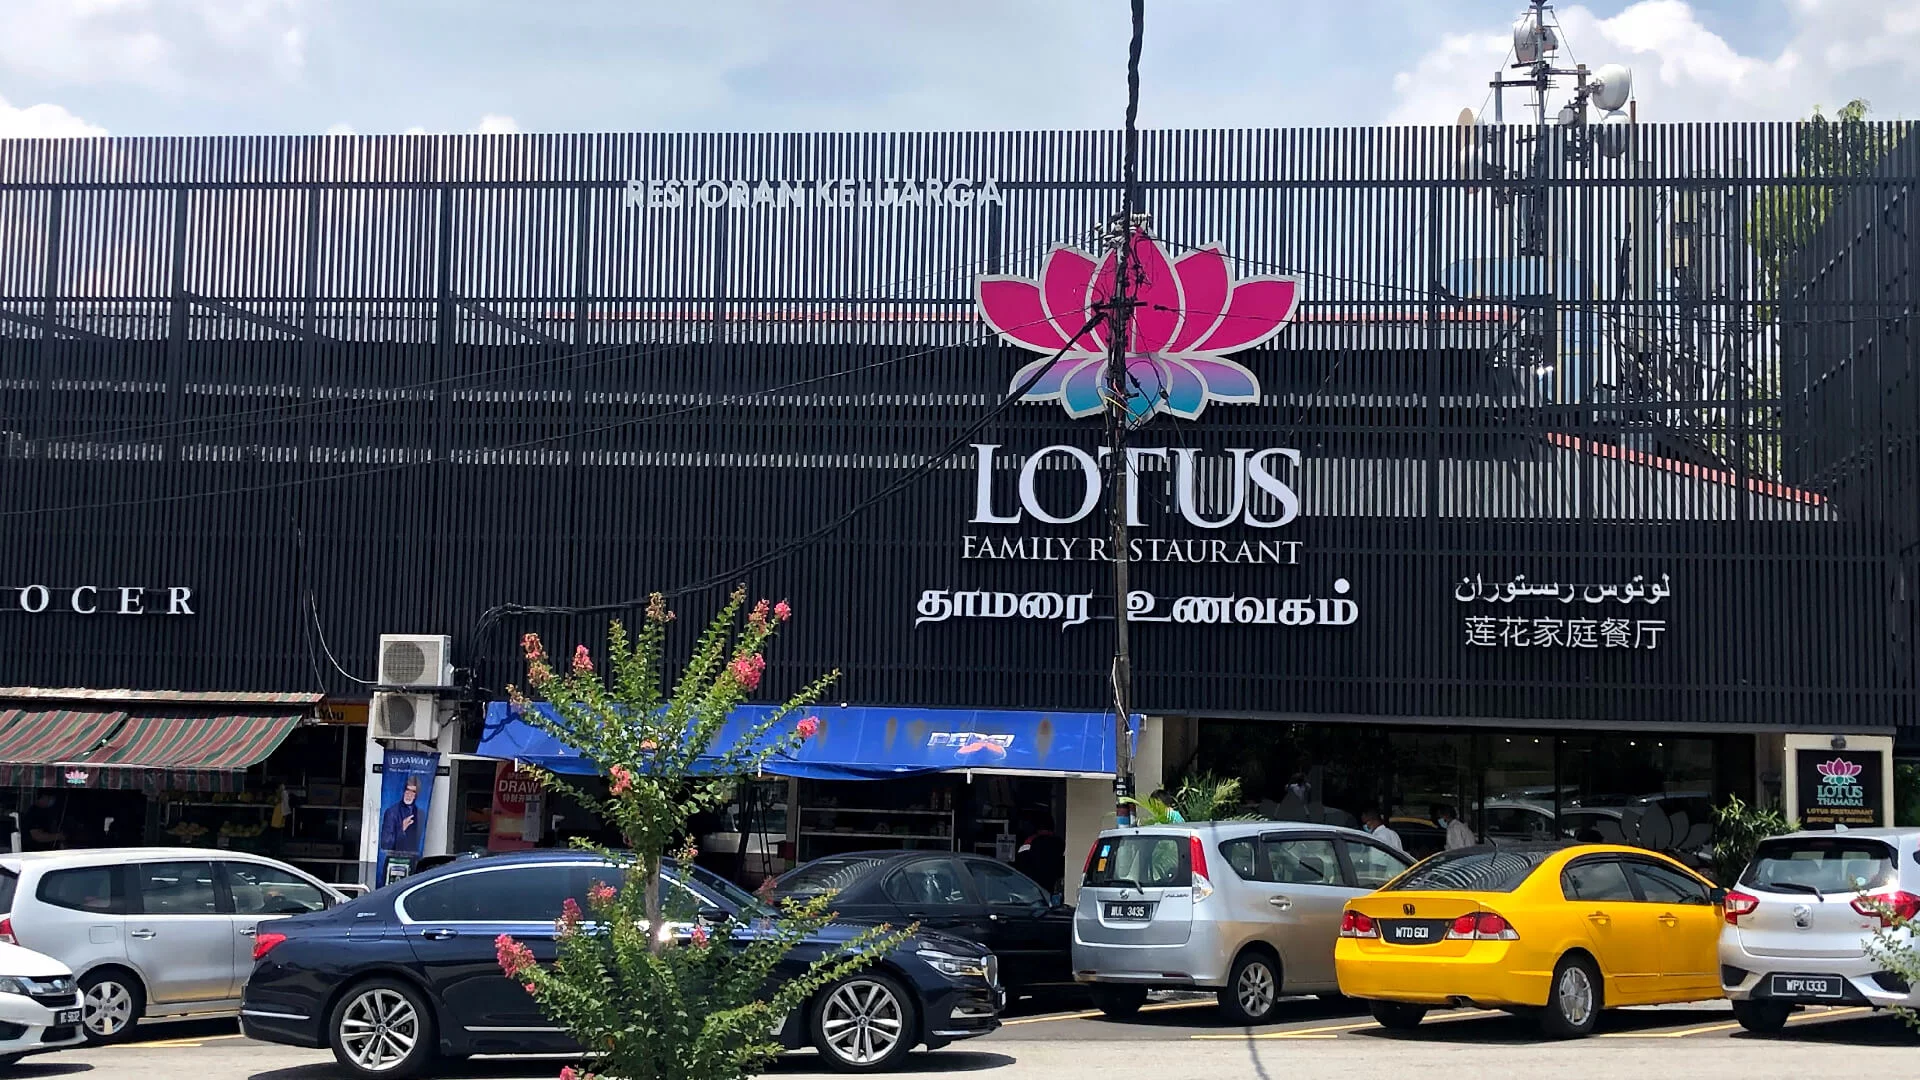 Lotus Family Restaurant Image 2